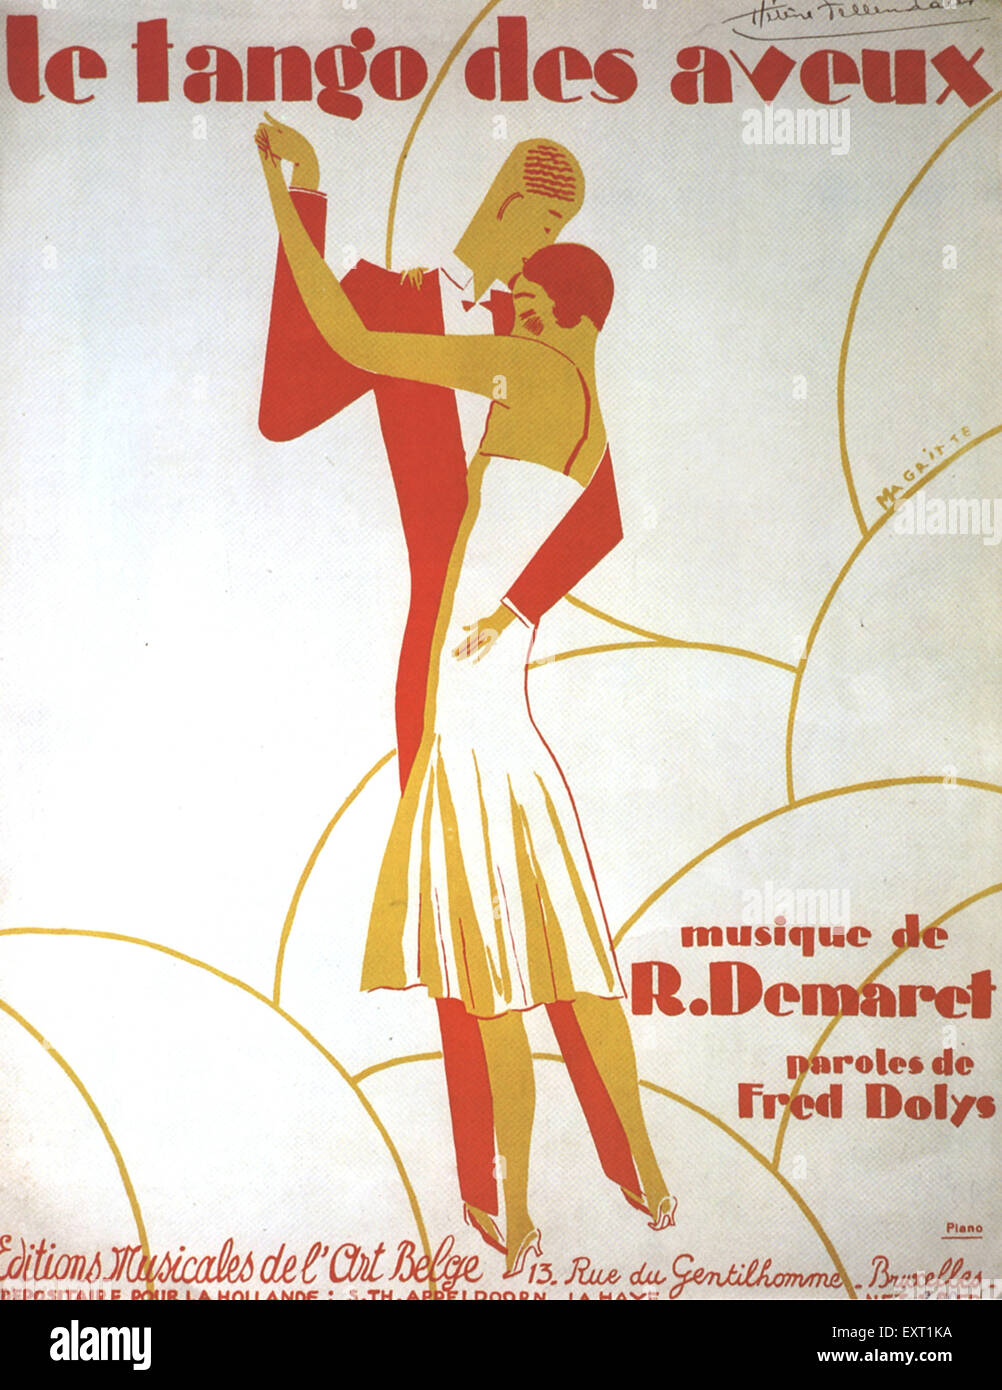 1920s Belgium Le Tango Des Aveux Sheet Music Cover Stock Photo - Alamy